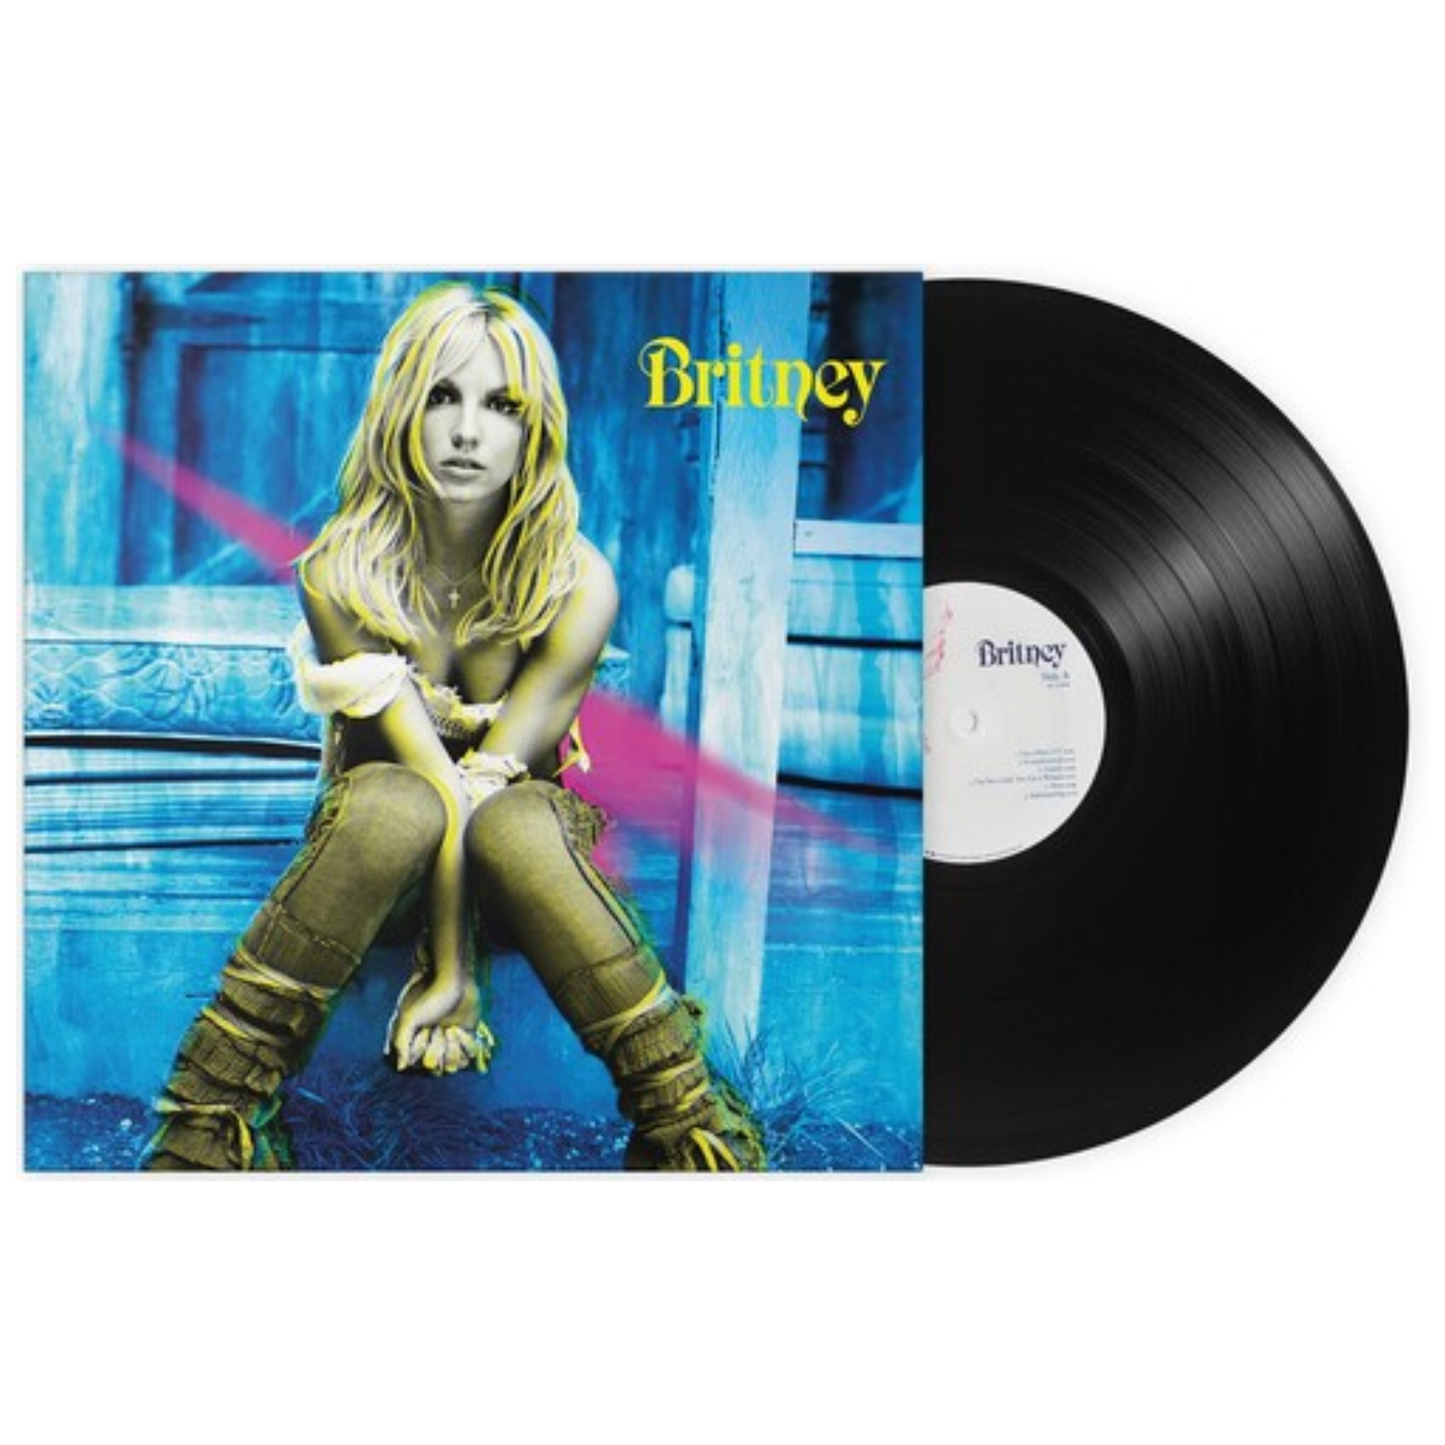 Britney Spears - Britney  (Vinyl)